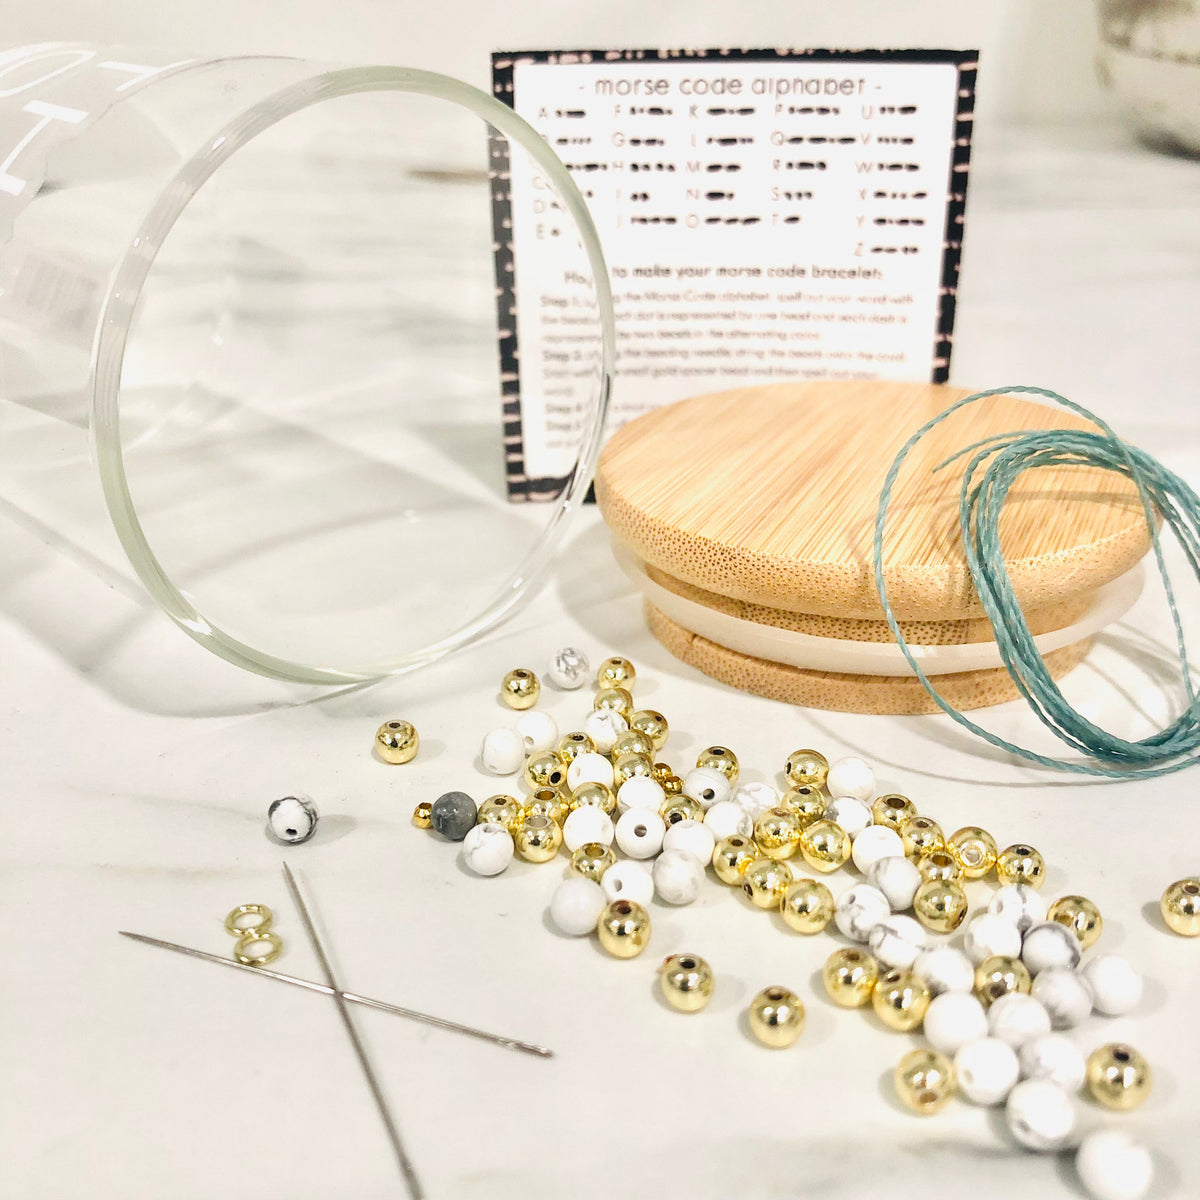 Create Your Own Morse Code Bracelet Kit - Luke Adams Glass Blowing Studio